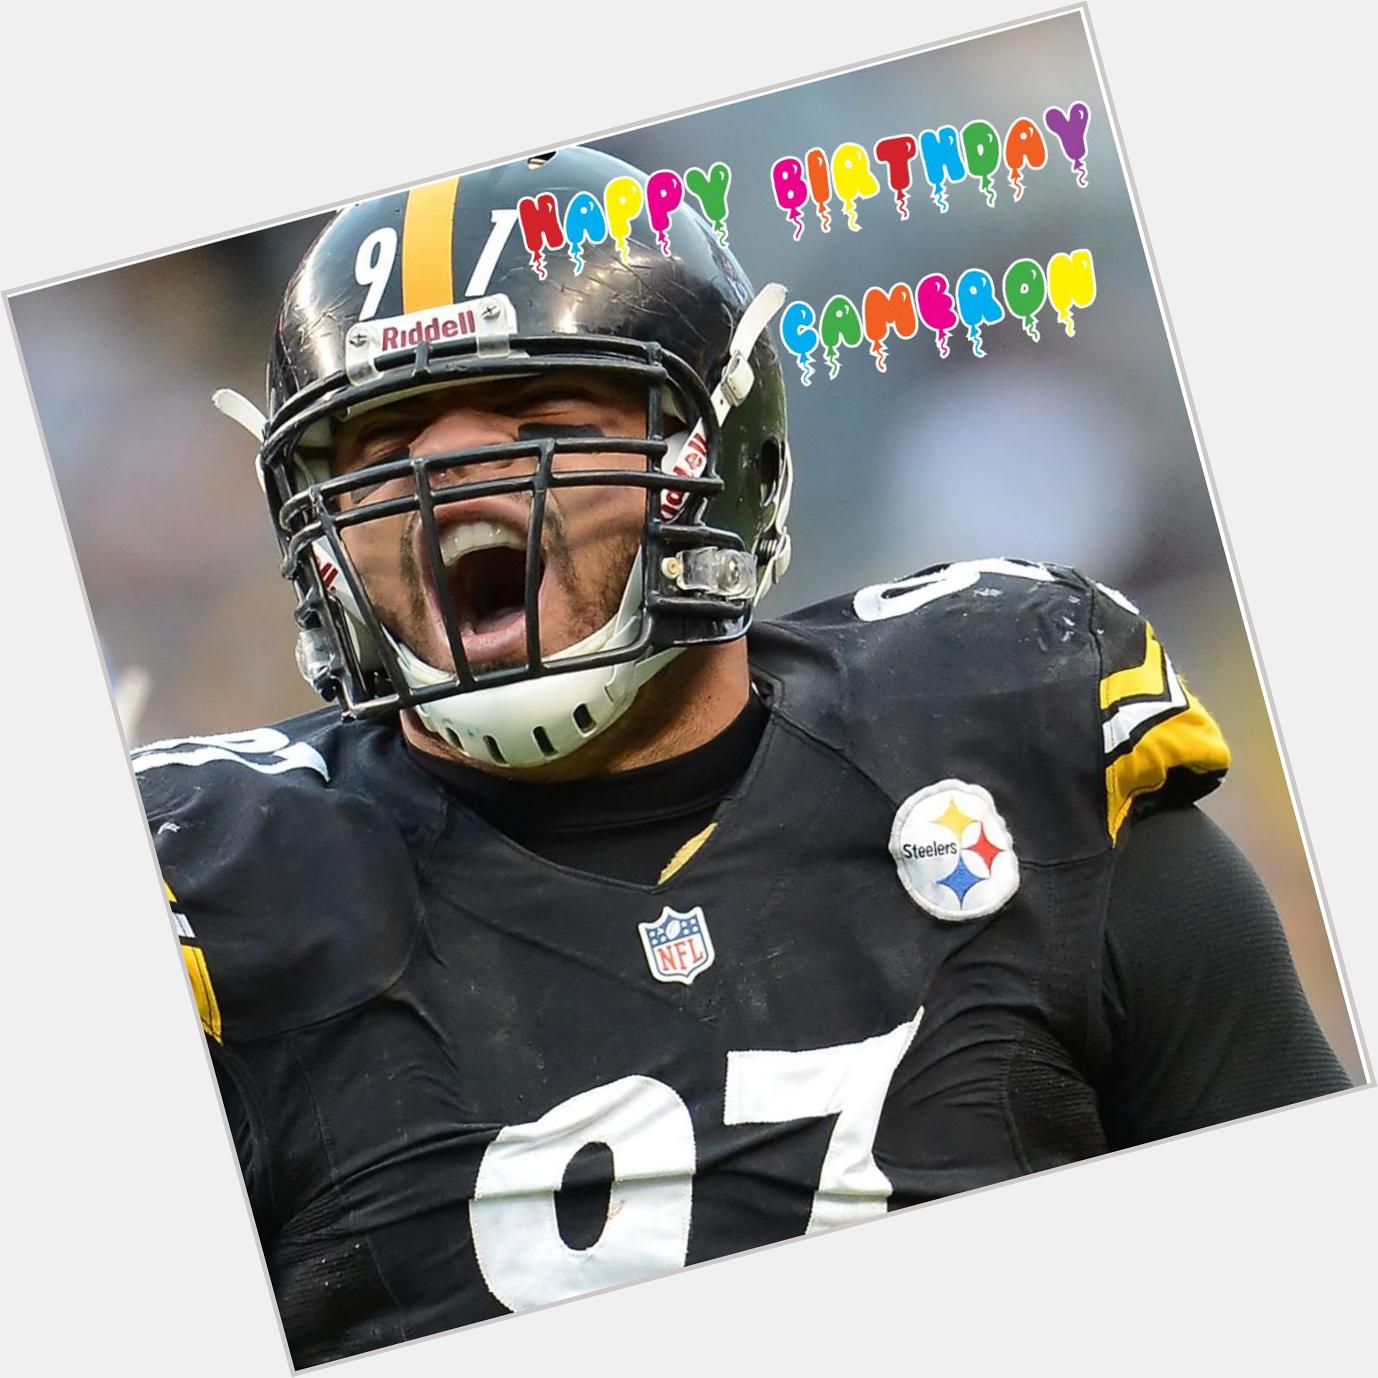 Happy Birthday to the Pittsburgh raised Cameron Heyward! 